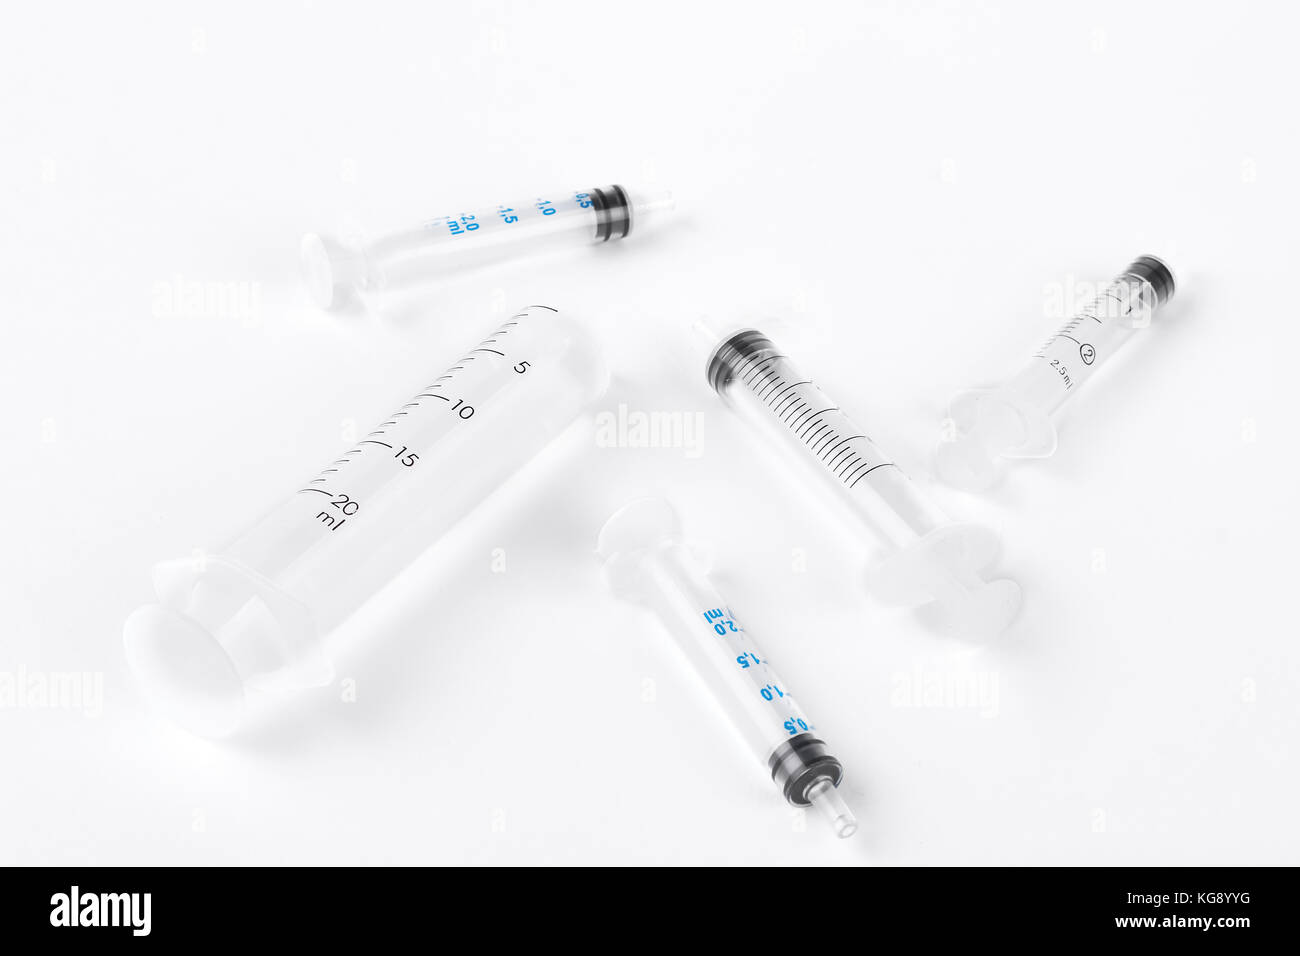 Group of syringes without needles. Stock Photo